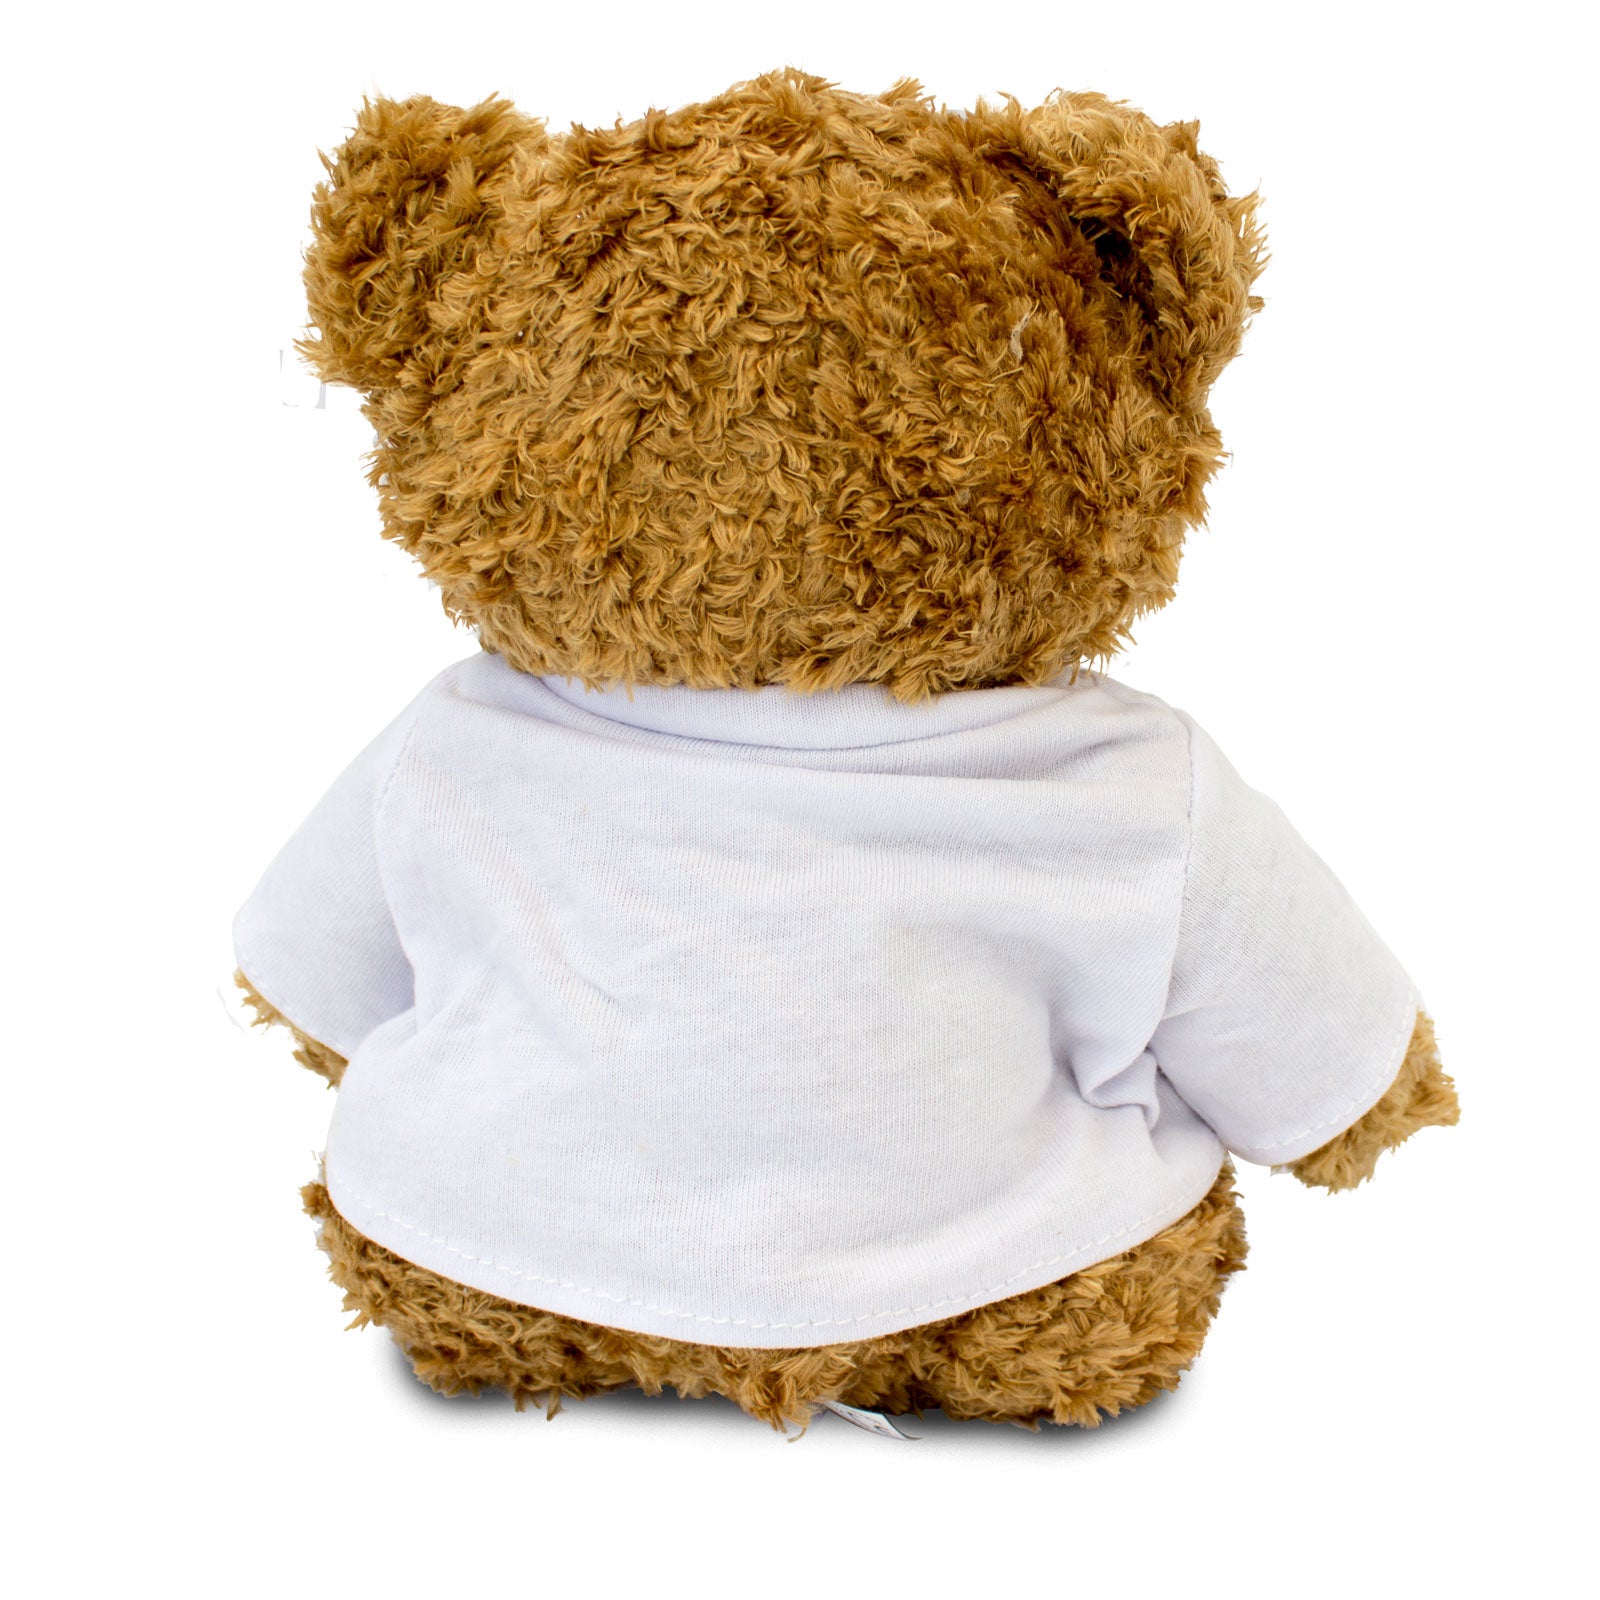 The Greatest Salesperson Ever - Teddy Bear